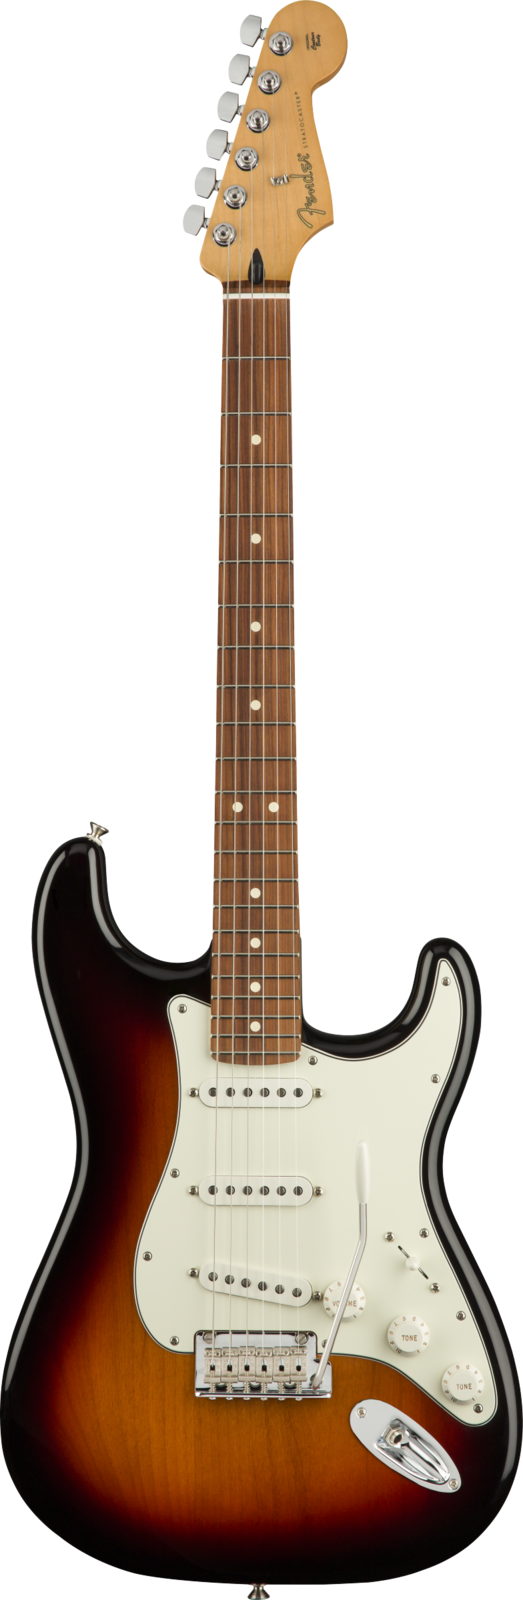 Tone　Guitar　Player　Fender　Electric　Stratocaster　Sunburst